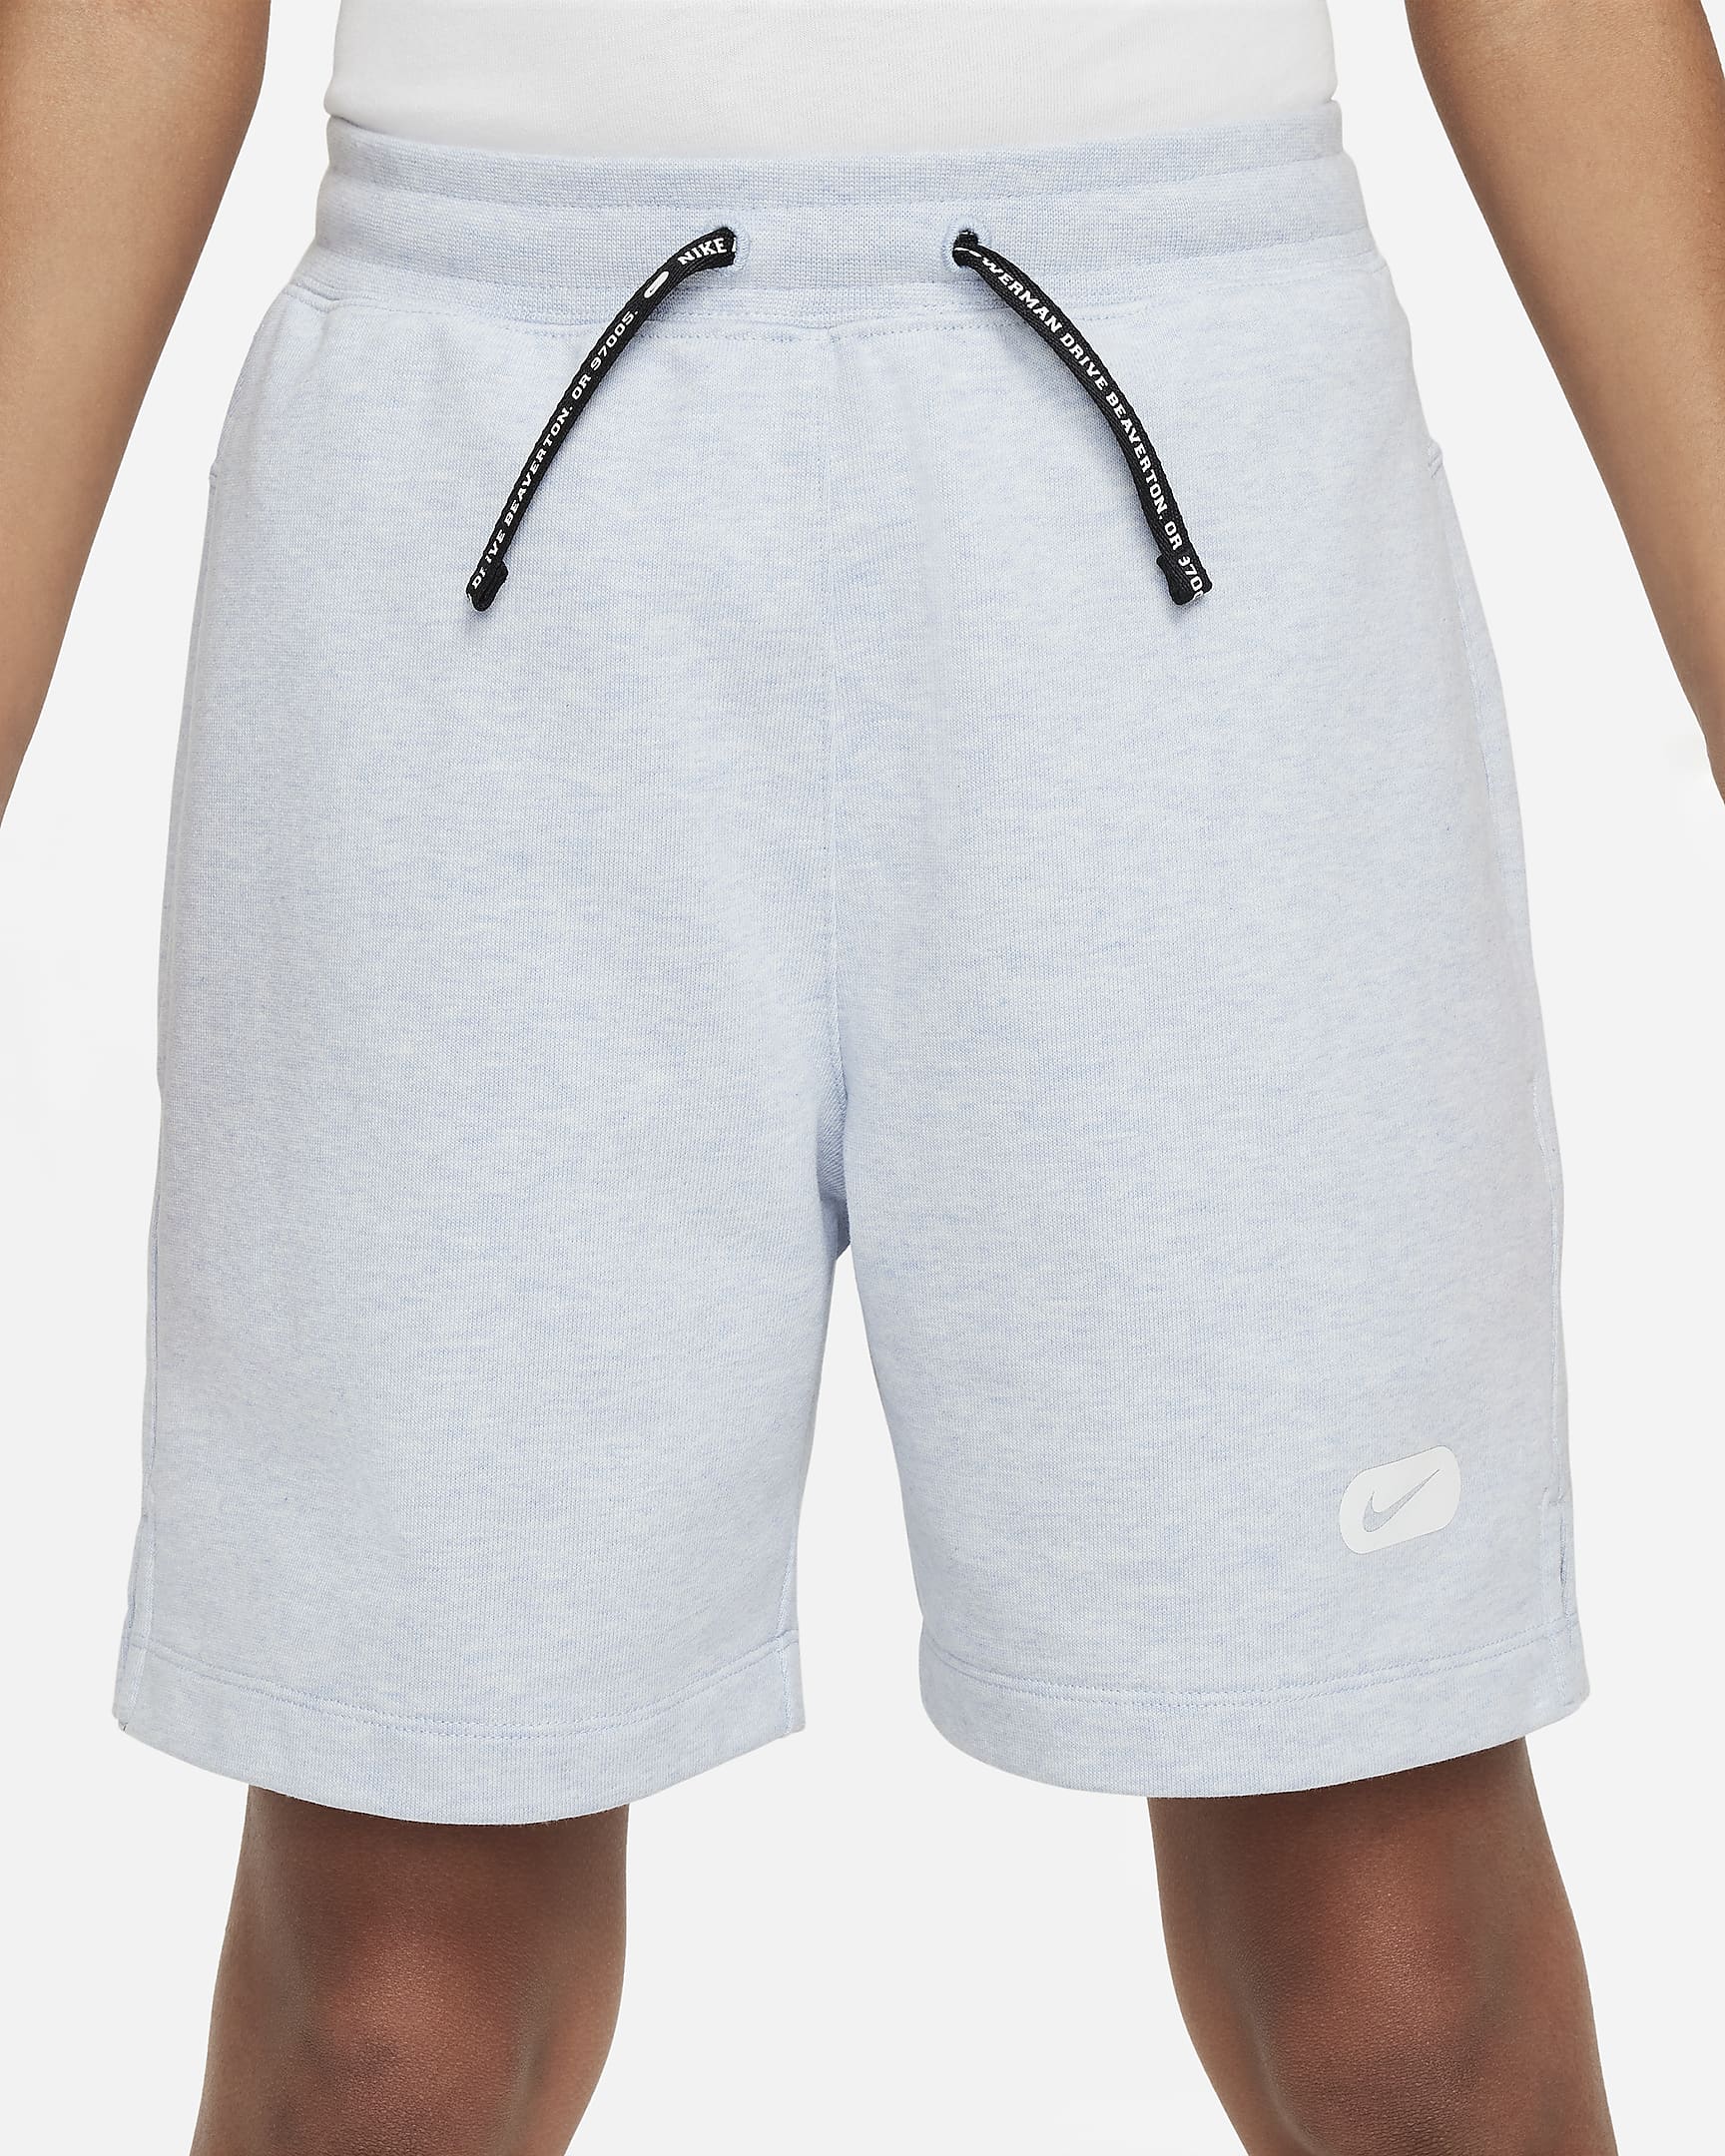 Nike Dri-FIT Athletics Fleece-Trainingsshorts für ältere Kinder (Jungen) - Light Armory Blue/Heather/Weiß